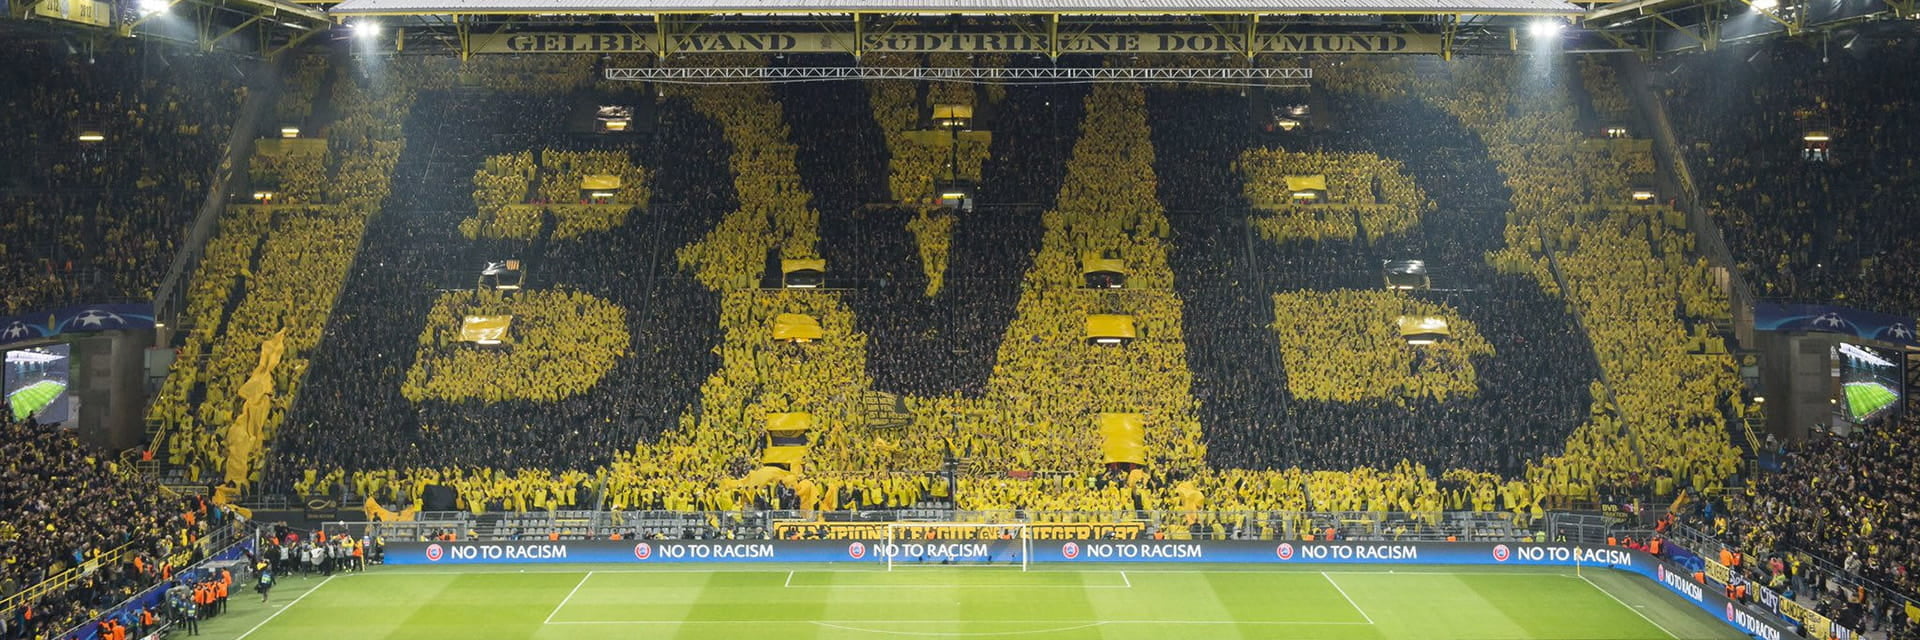 Borussia Dortmund - VfL Bochum, 6 novemberden 15:30